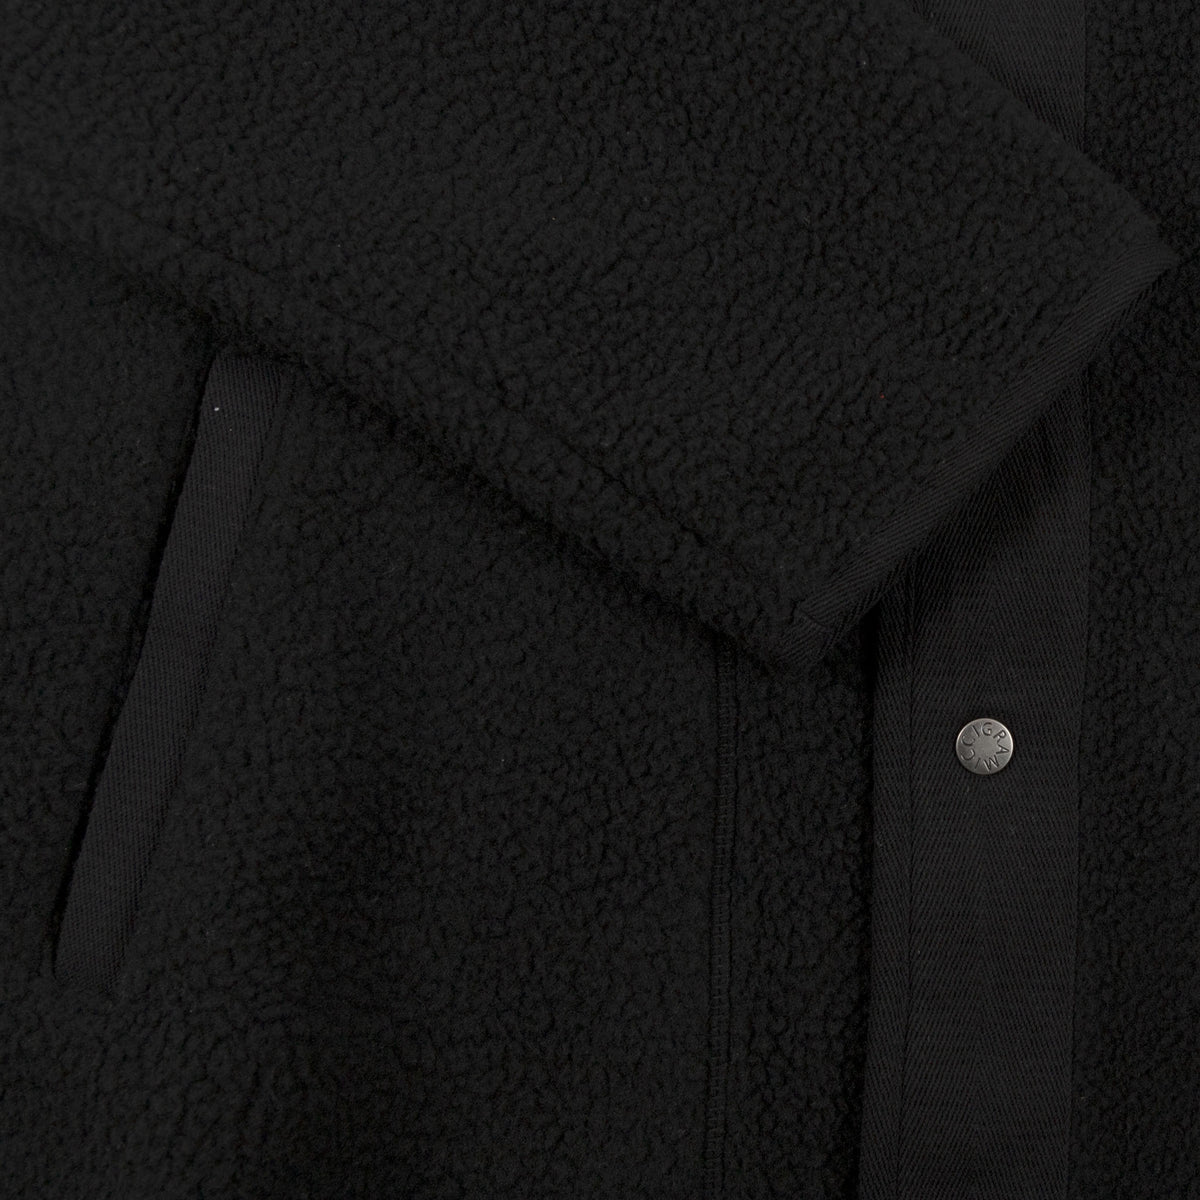 Gramicci Boa Fleece Jacket in Black outer wear warm cuff